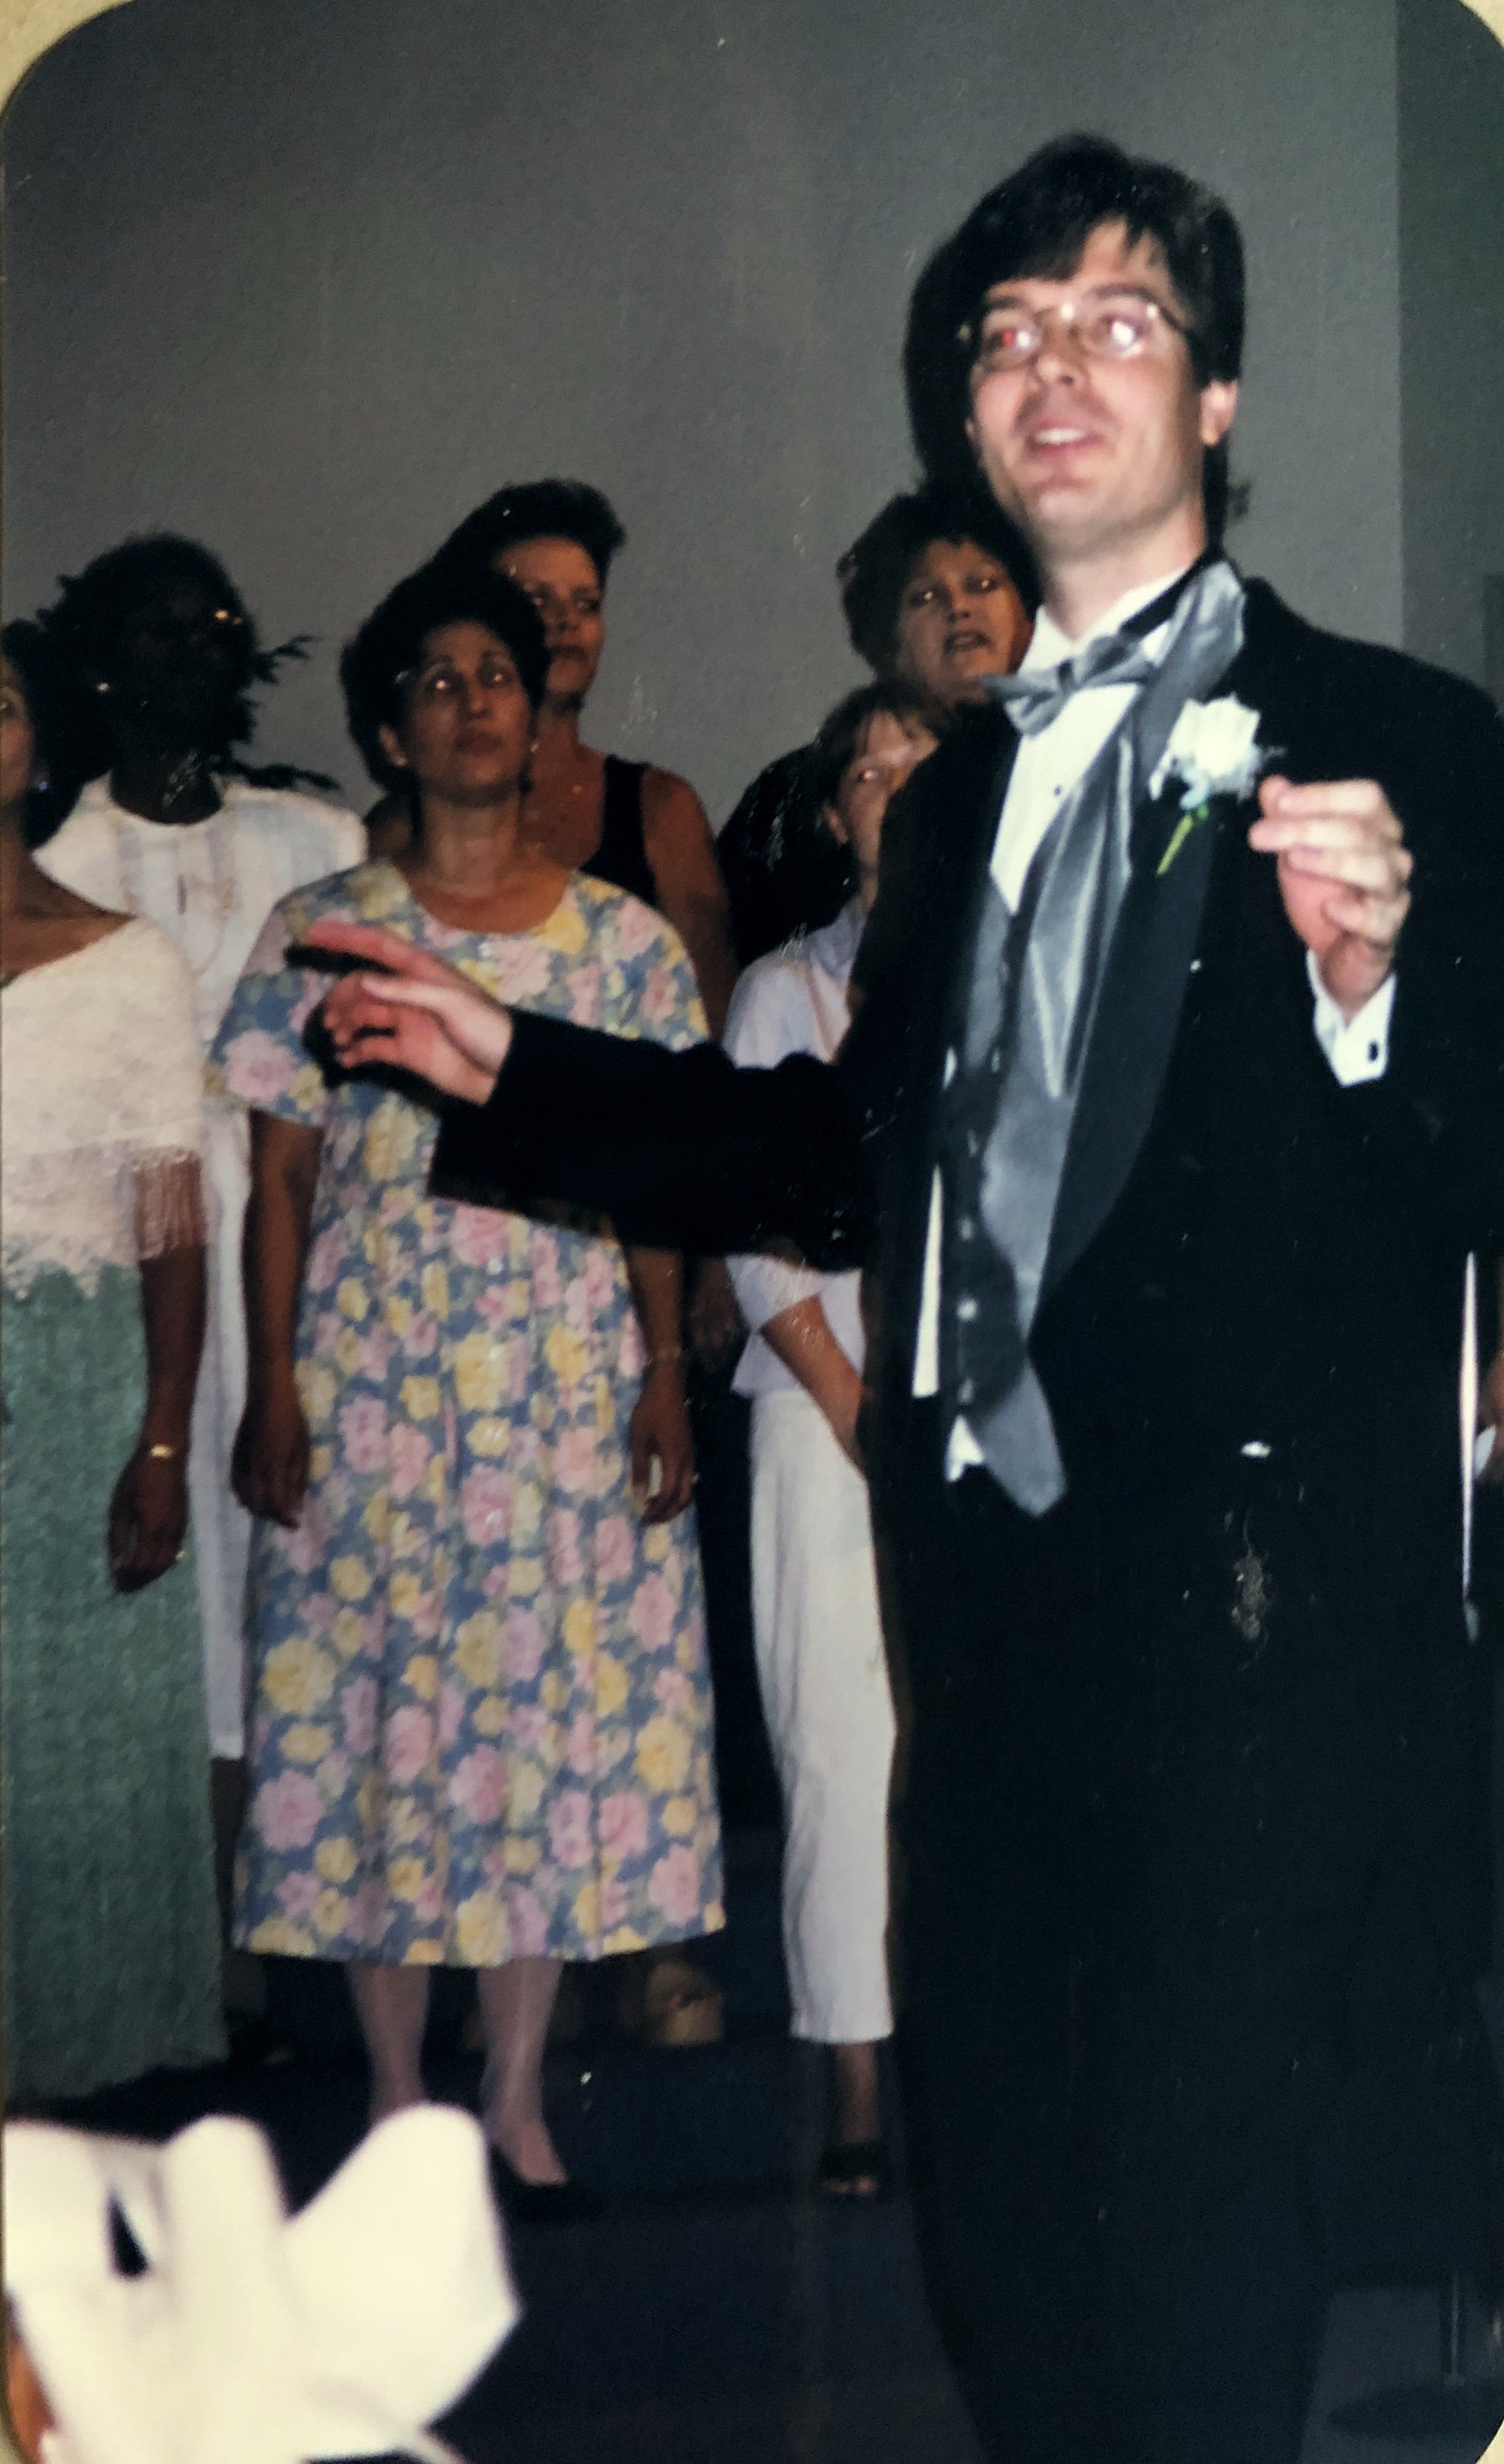 Mark leading choir at our wedding
August 4, 2000